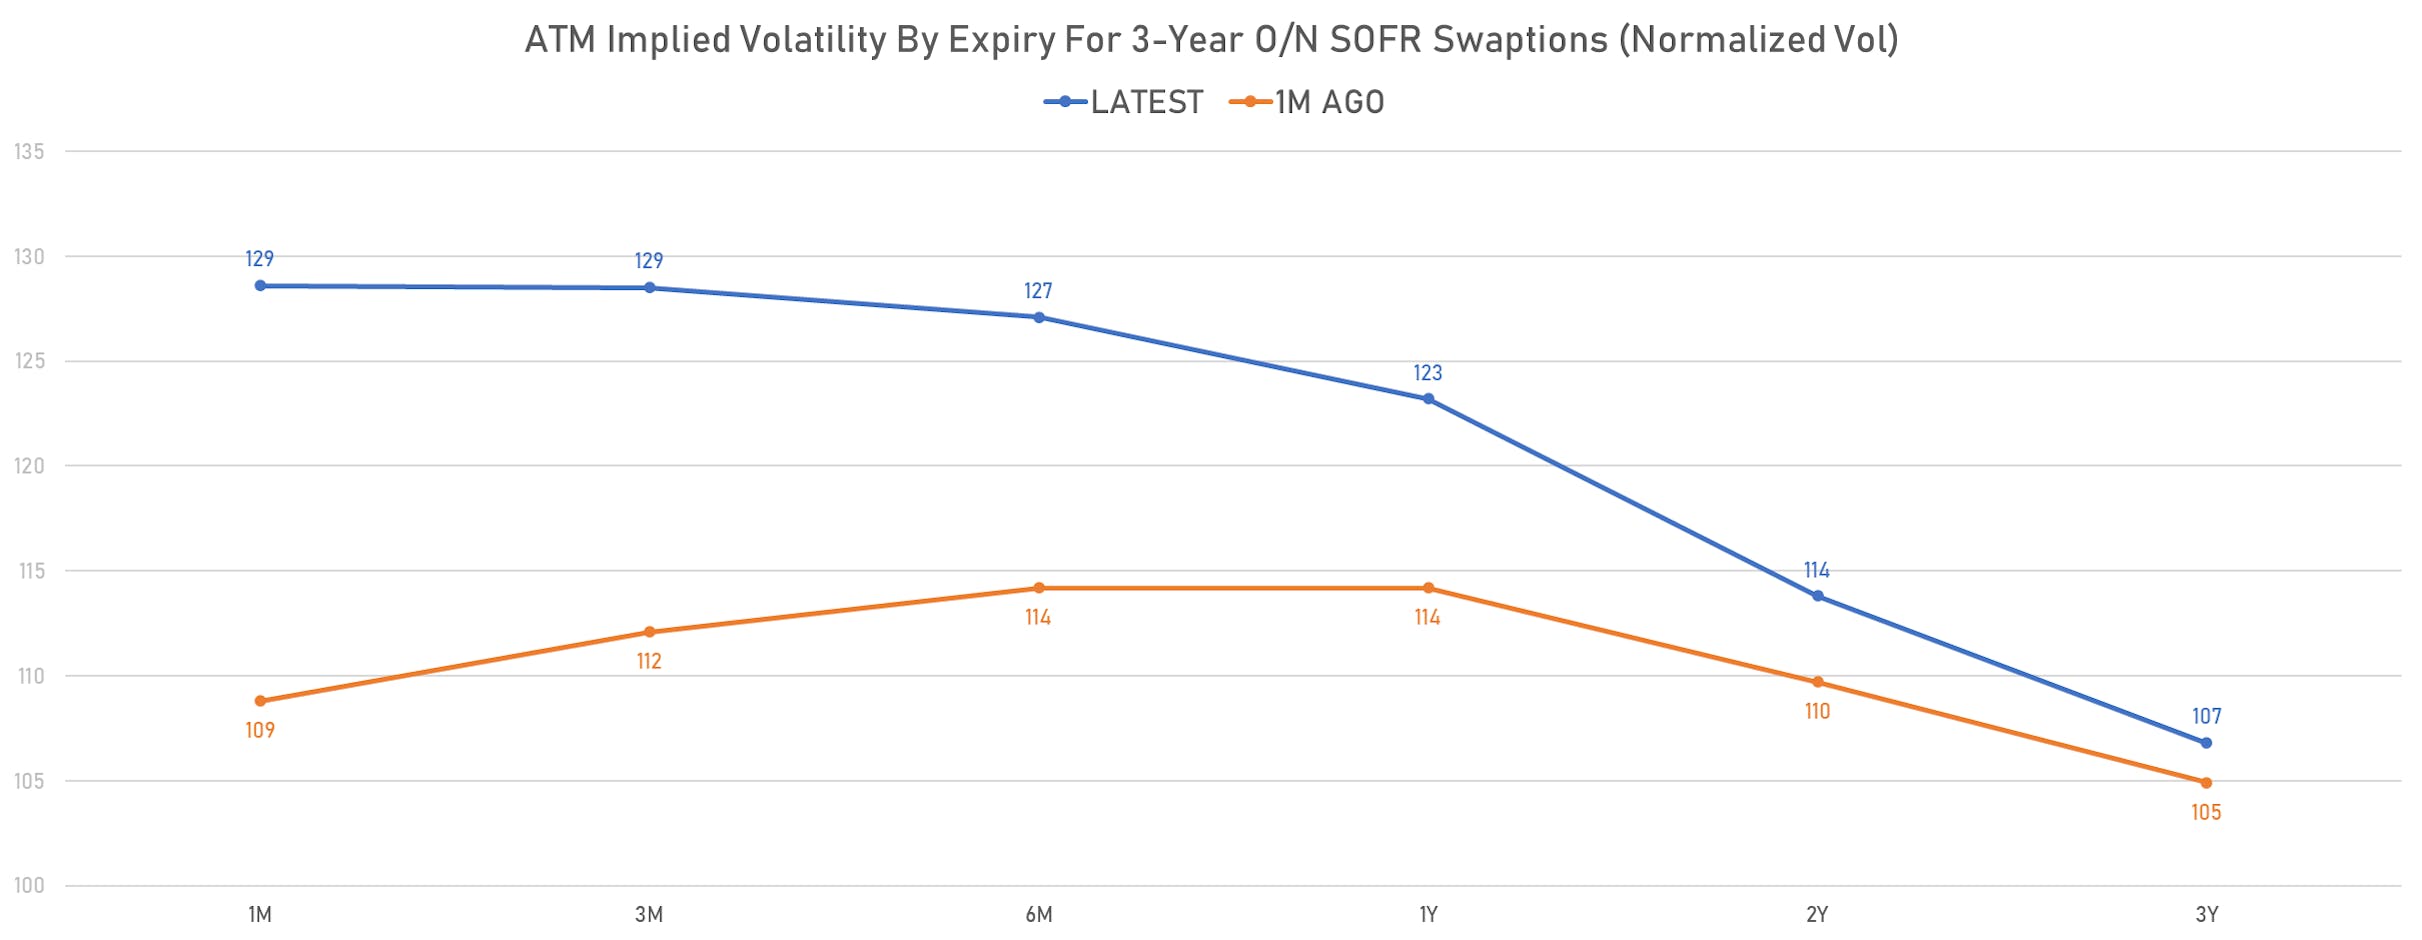 Term Structure Of Rates Volatility | Sources: phipost.com, Refinitiv data